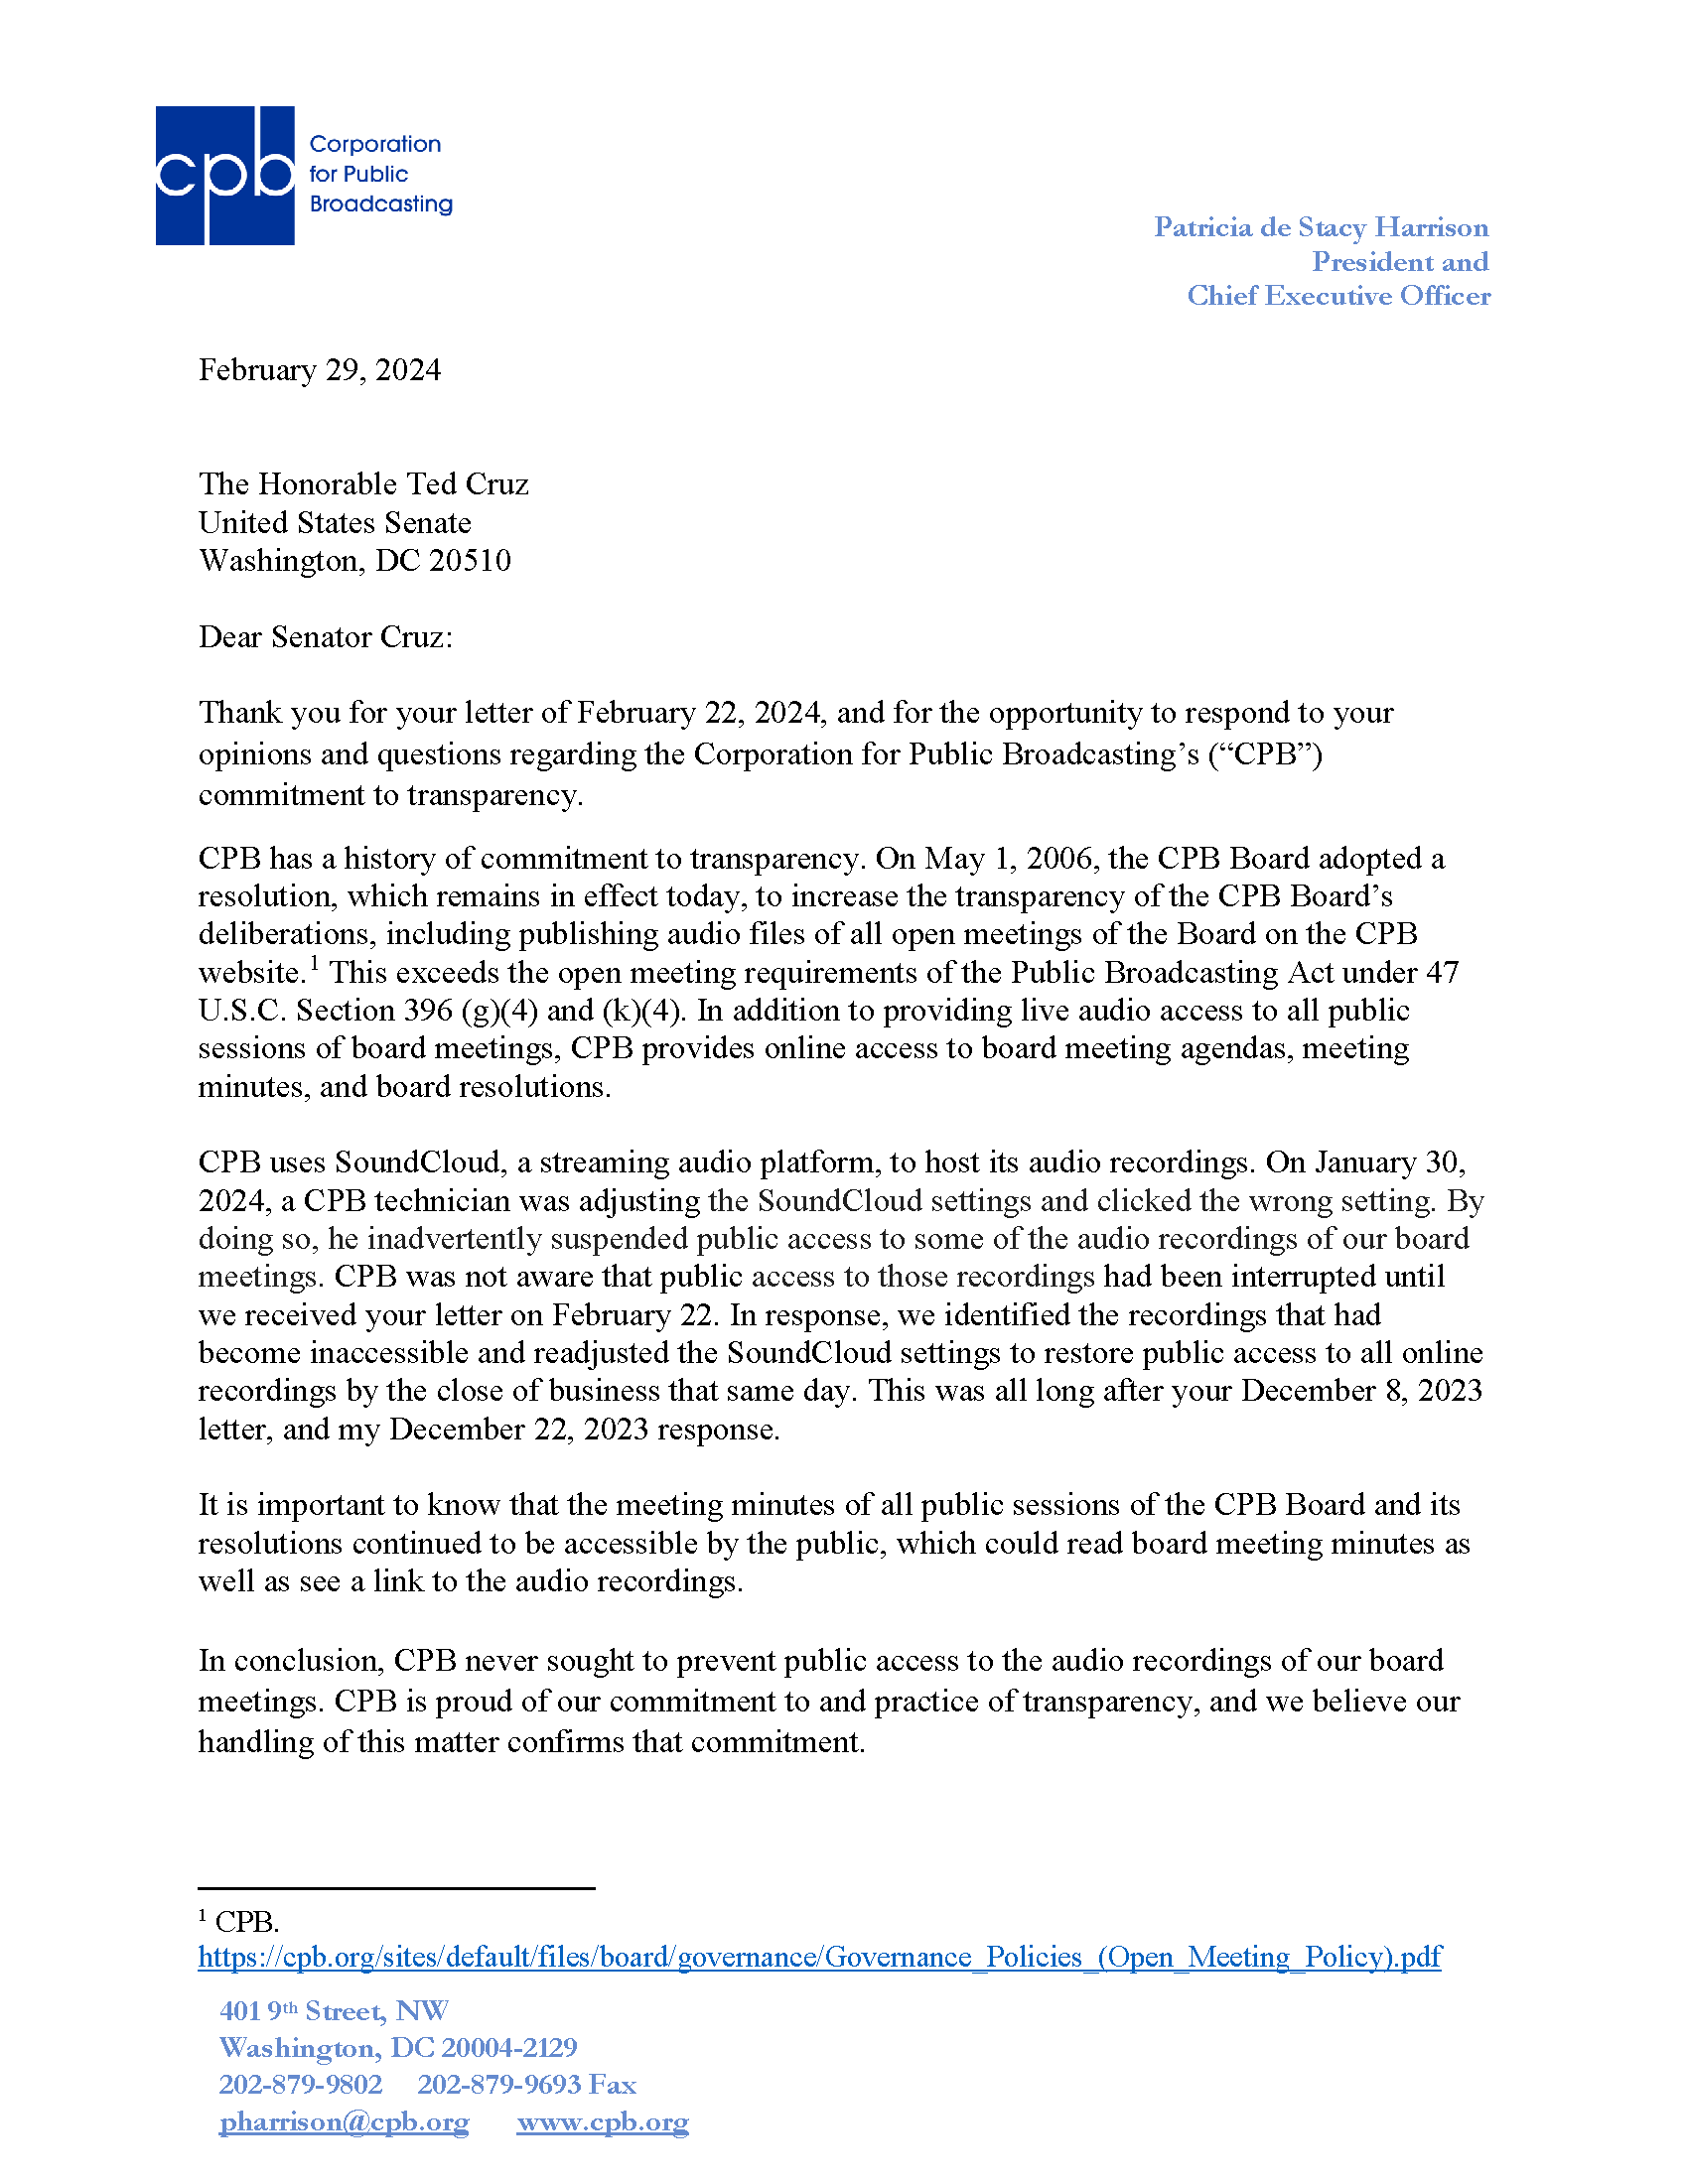 CPB Response Letter to Sen Cruz 2-29-2024 Page 1